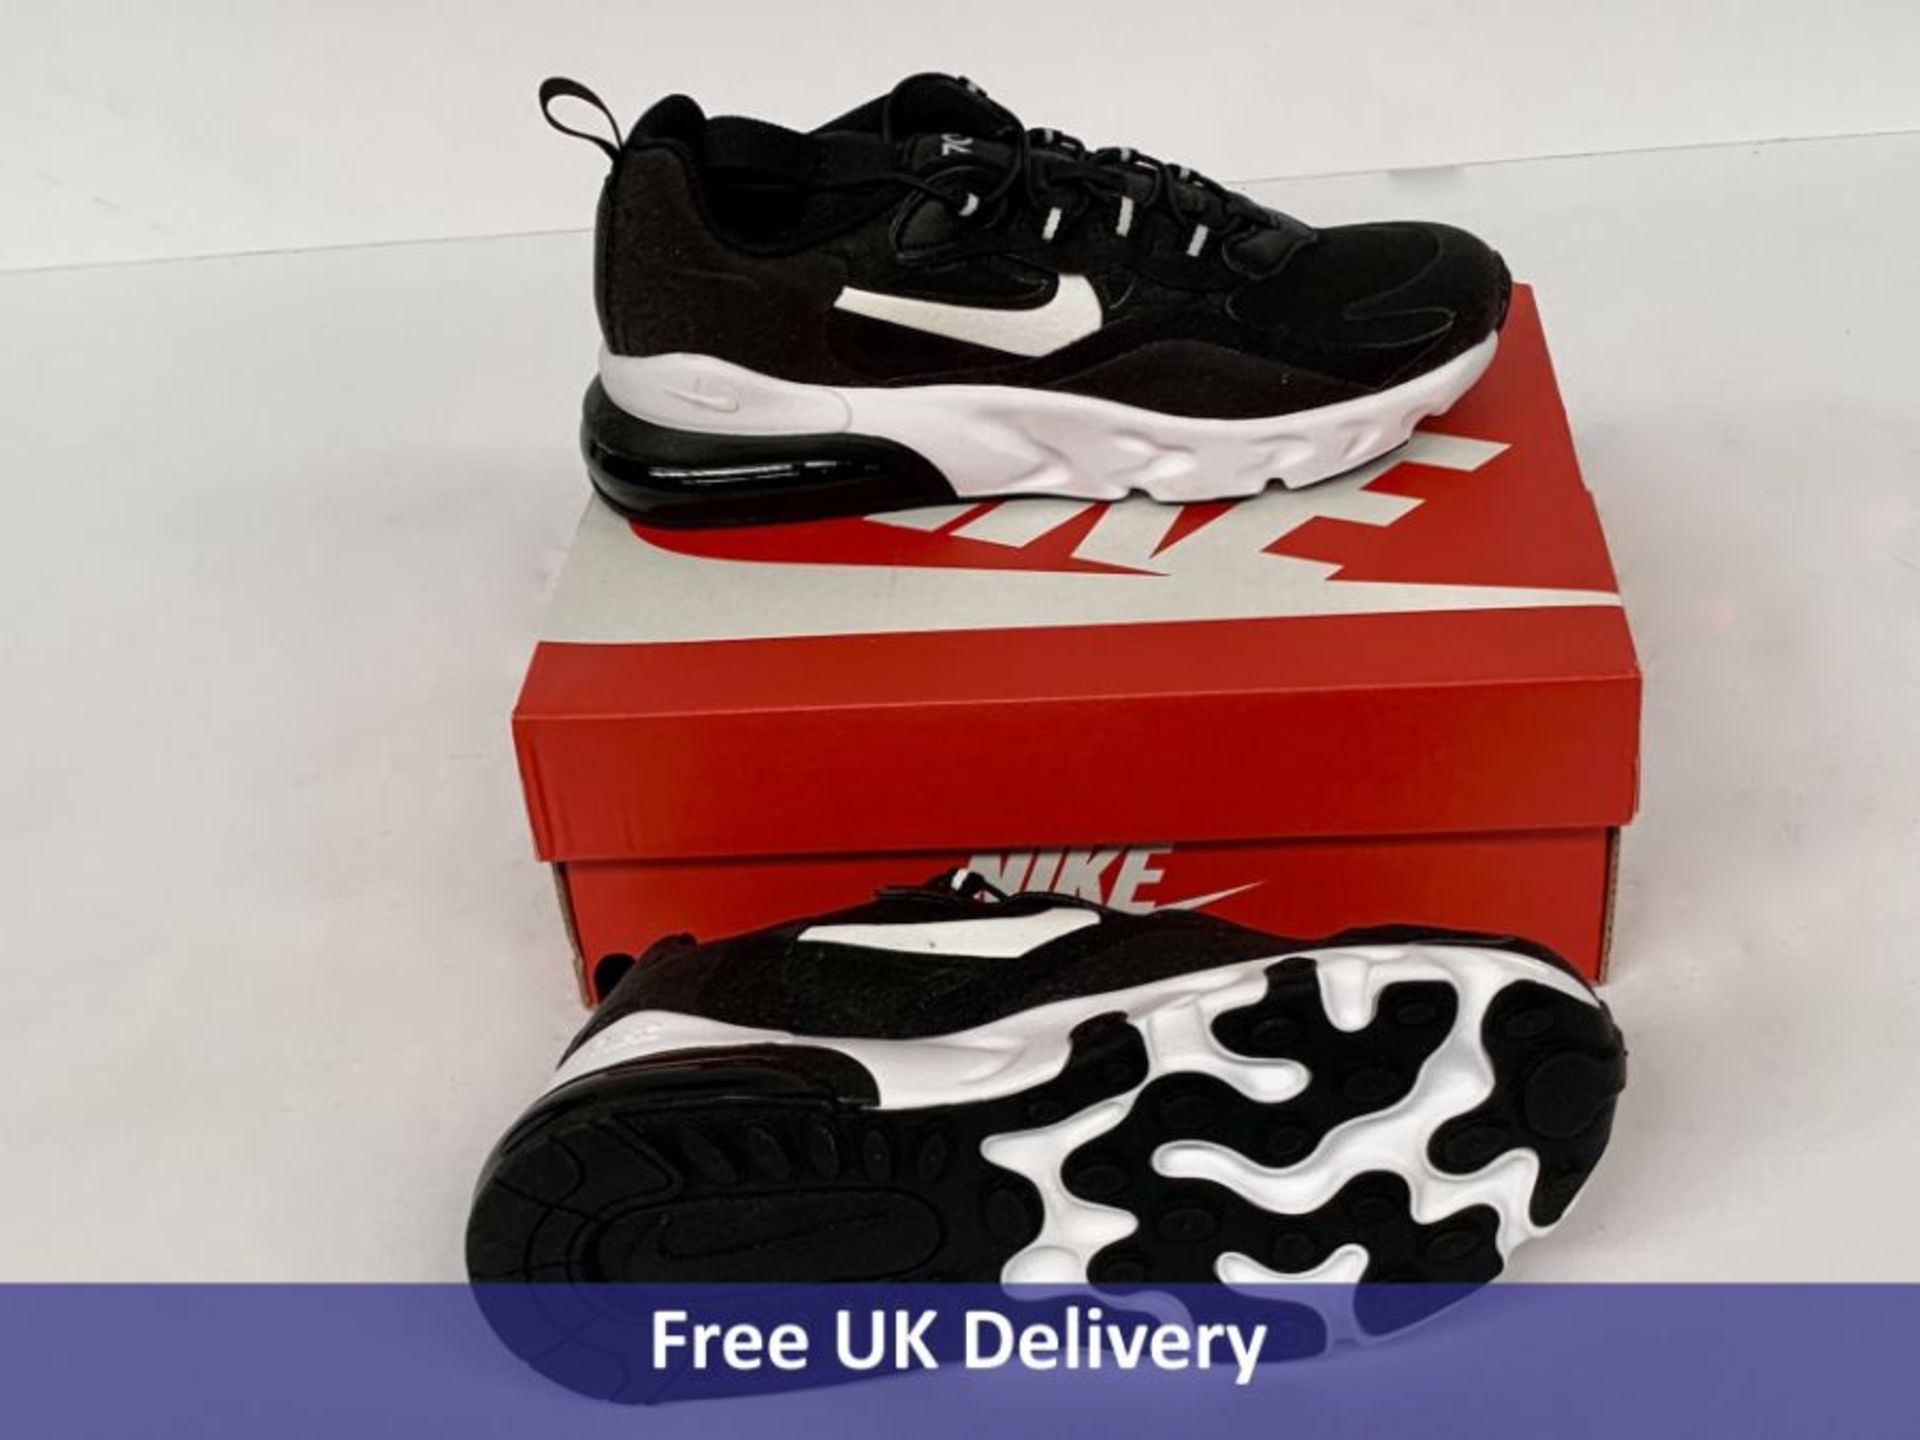 Nike Child's Air Max 270 RT PS Trainers, Black & White, UK 2.5